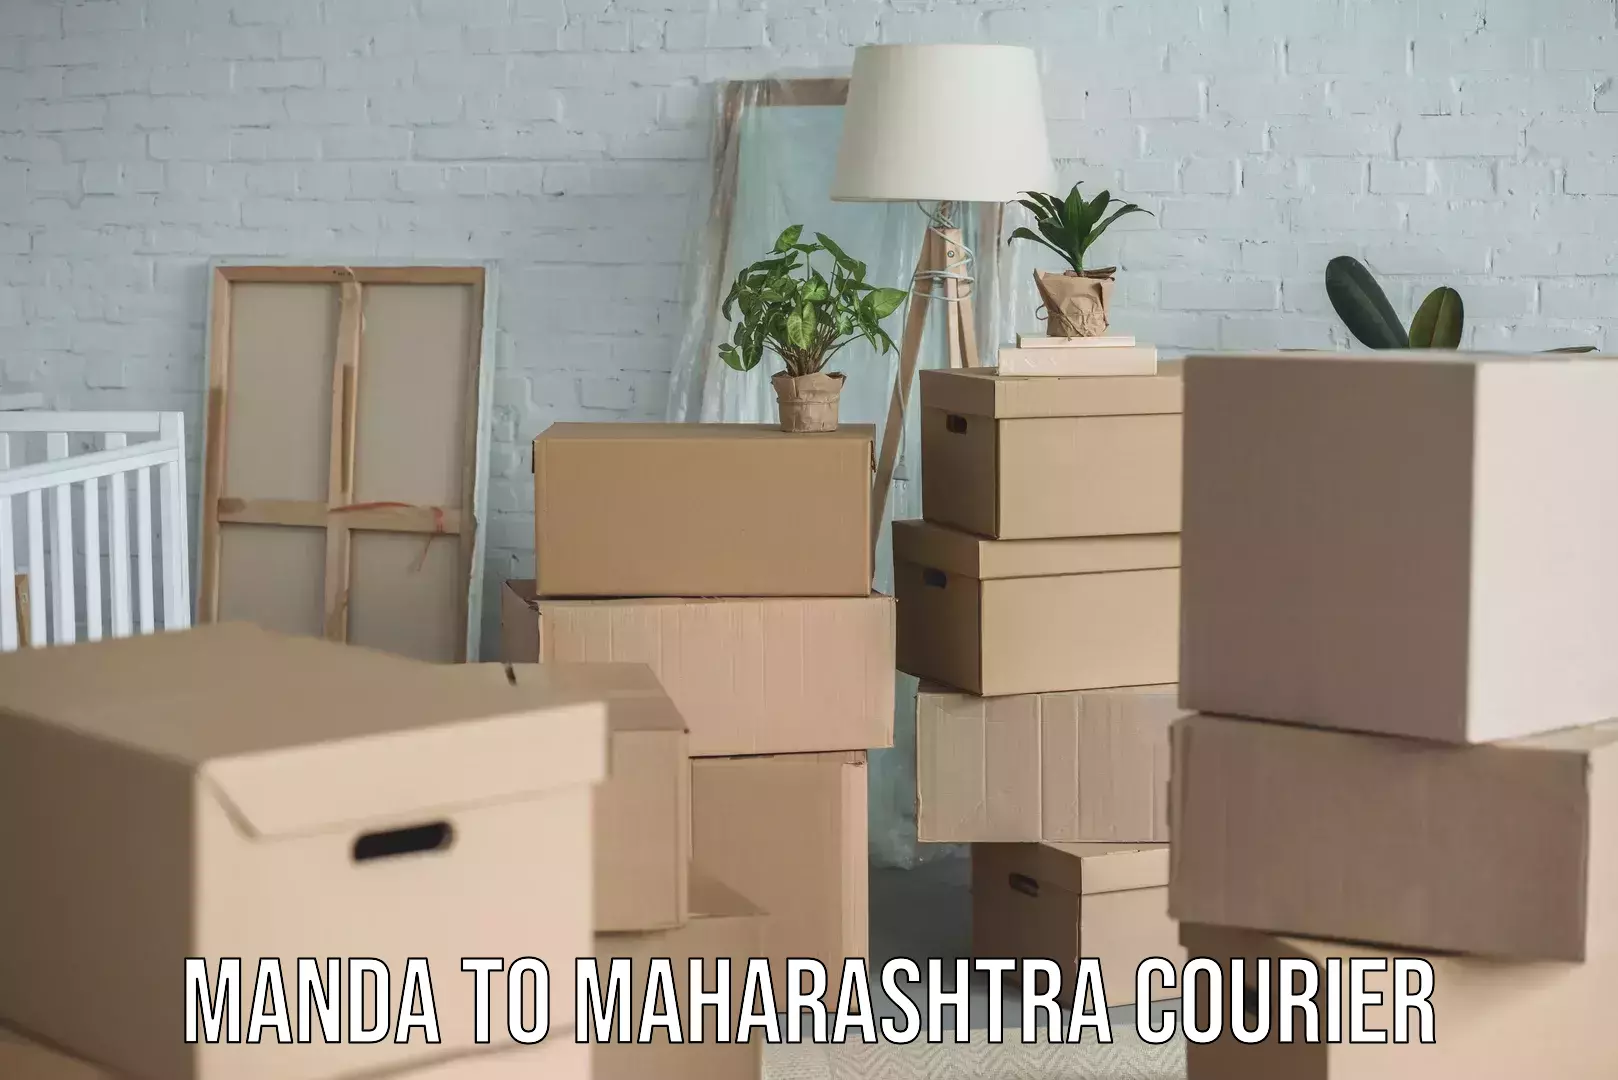 Trusted relocation experts Manda to Maharashtra